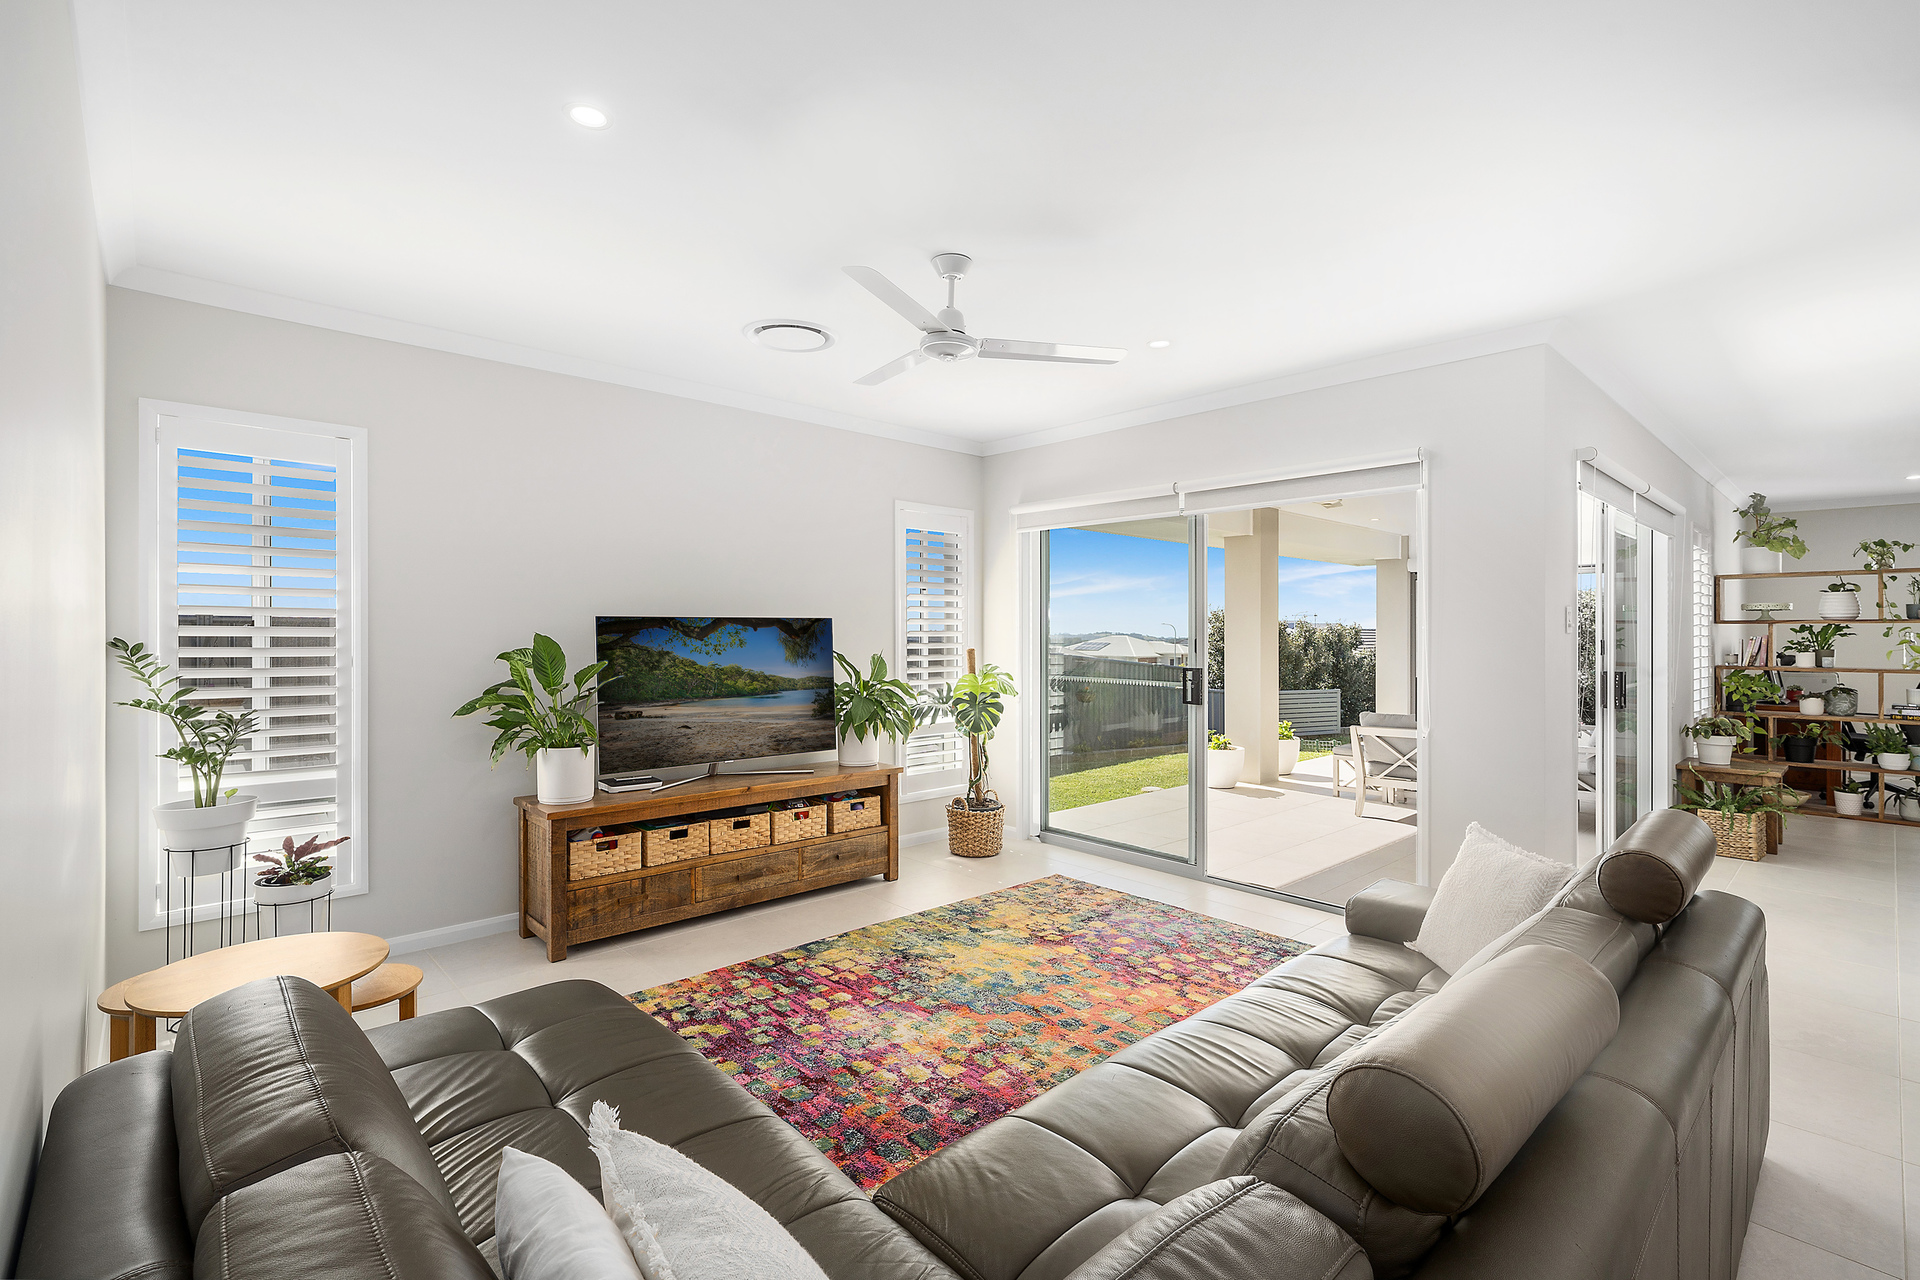 Sold House 16 Millbrook Terrace, Wollongbar NSW 2477 - Nov 24, 2022 ...